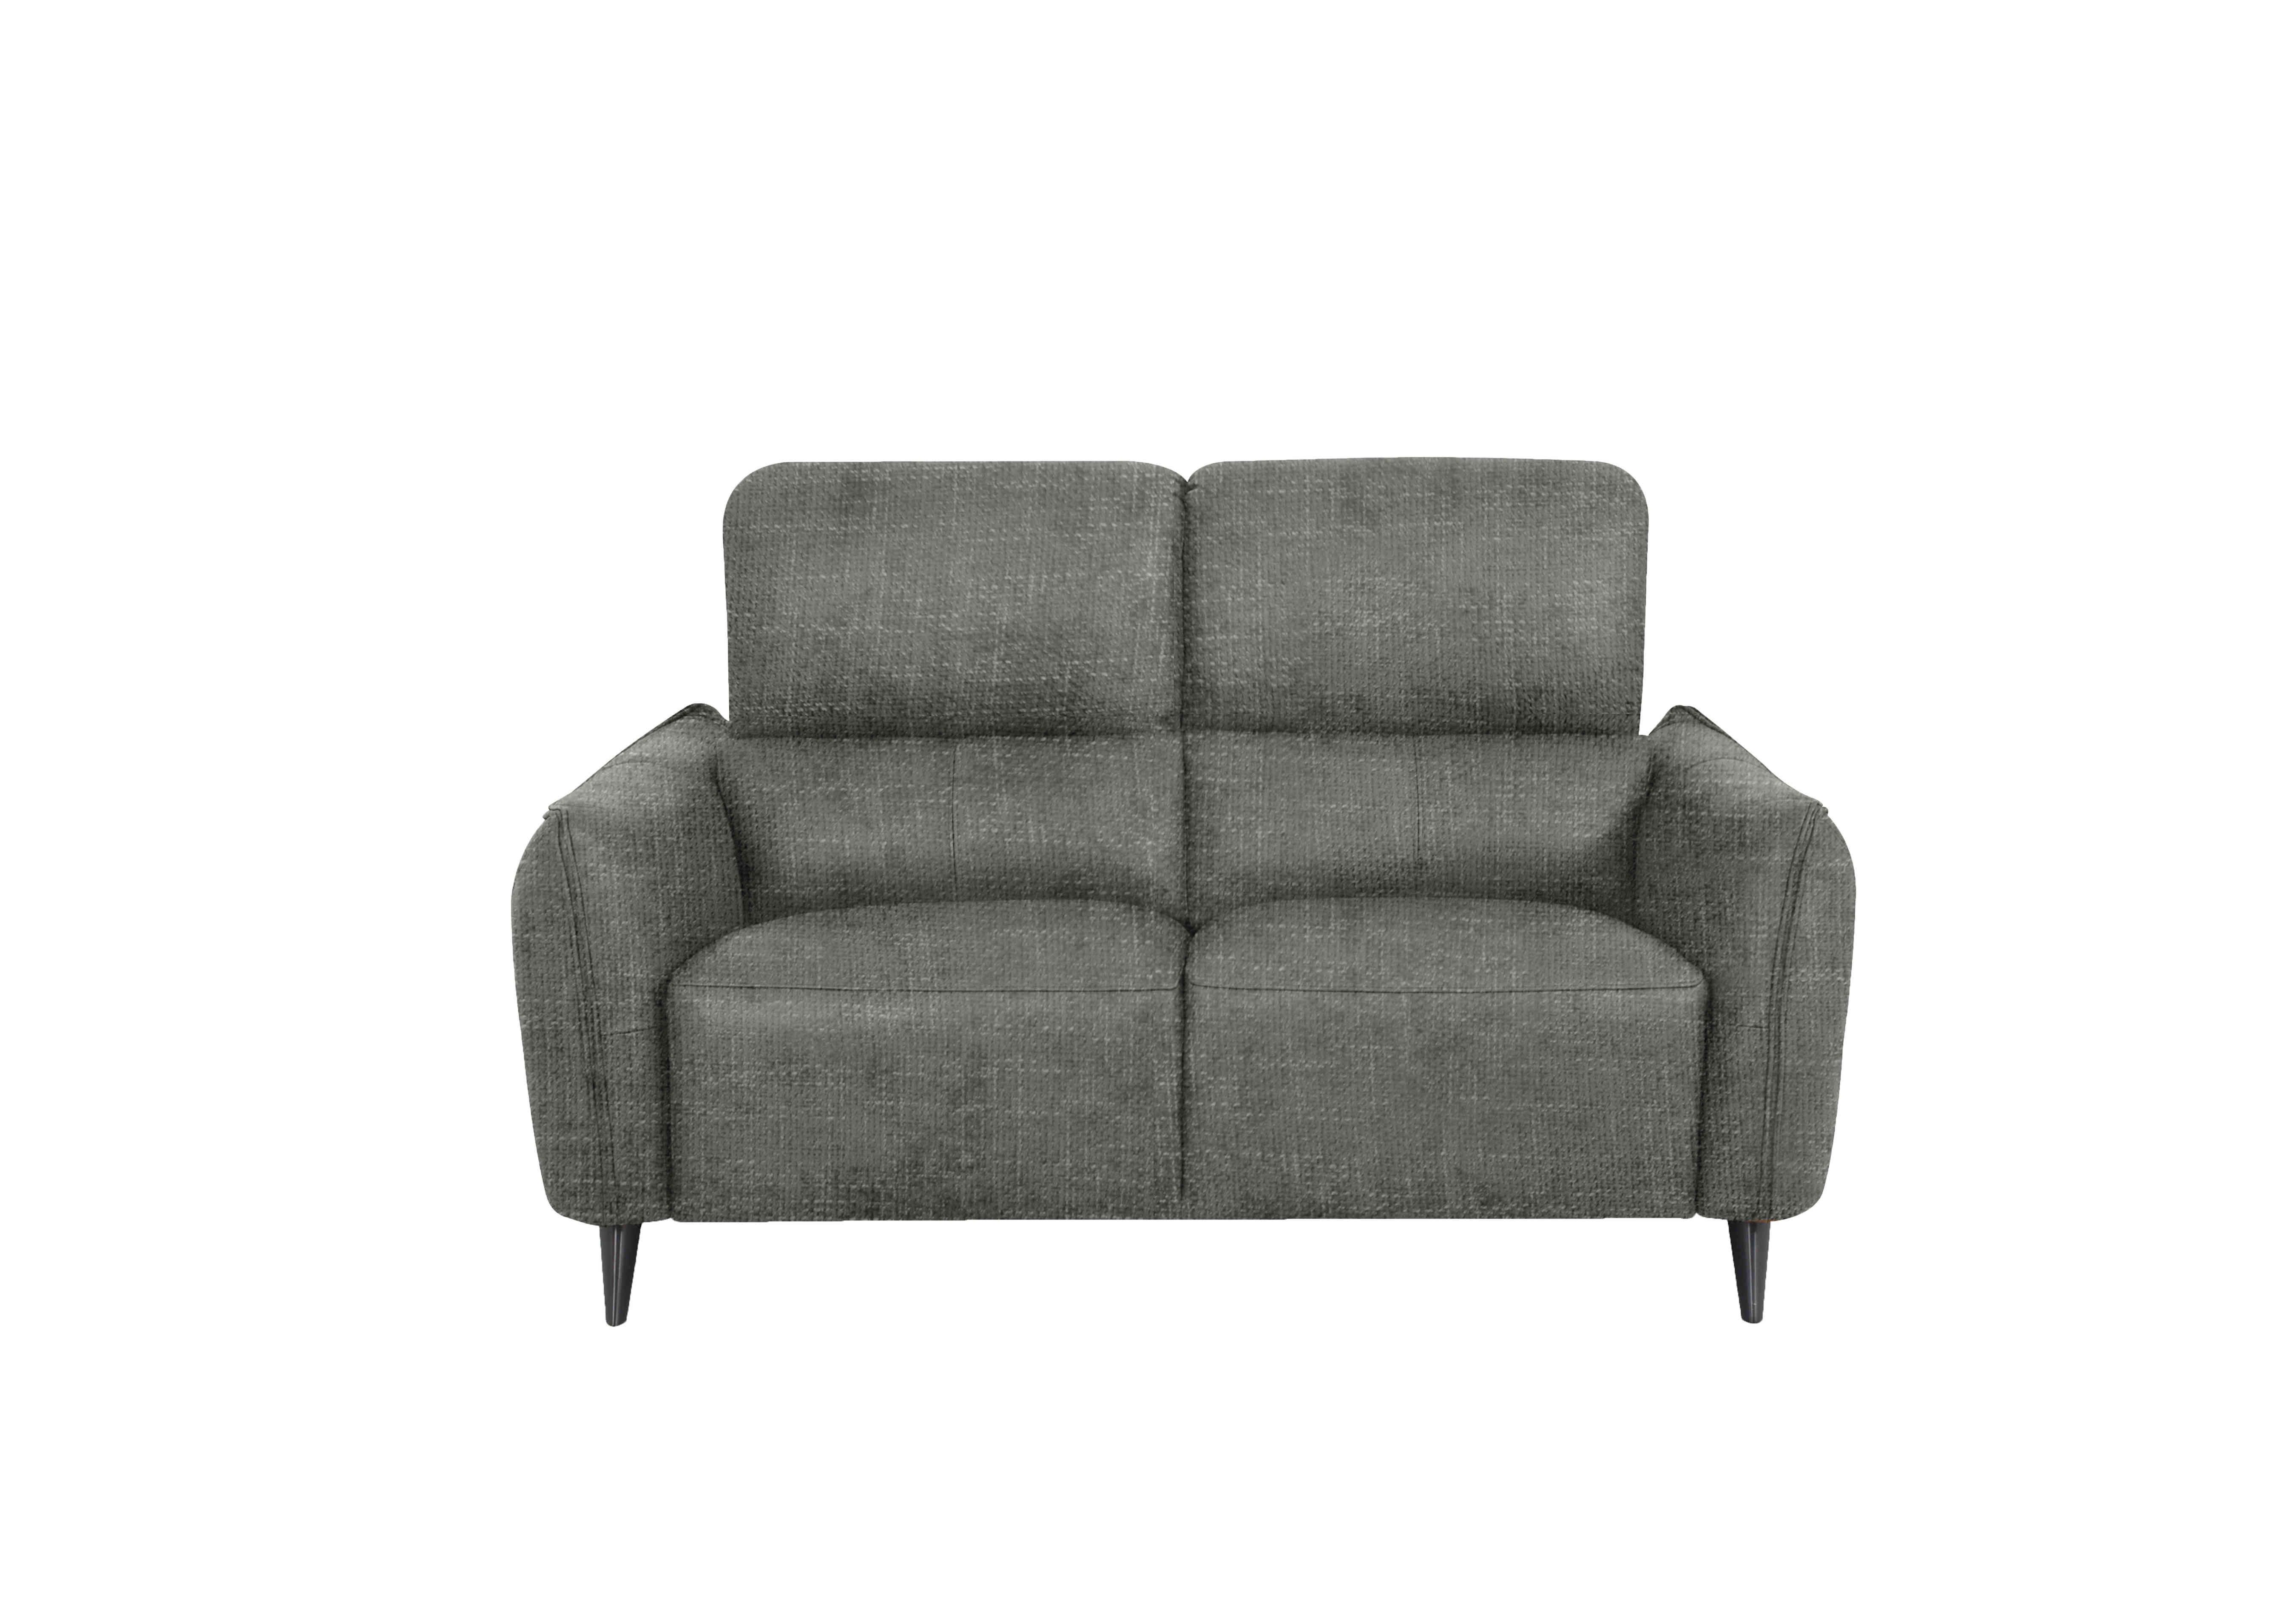 Maddox 2 Seater Fabric Sofa in Fab-Cac-R455 Ash on Furniture Village